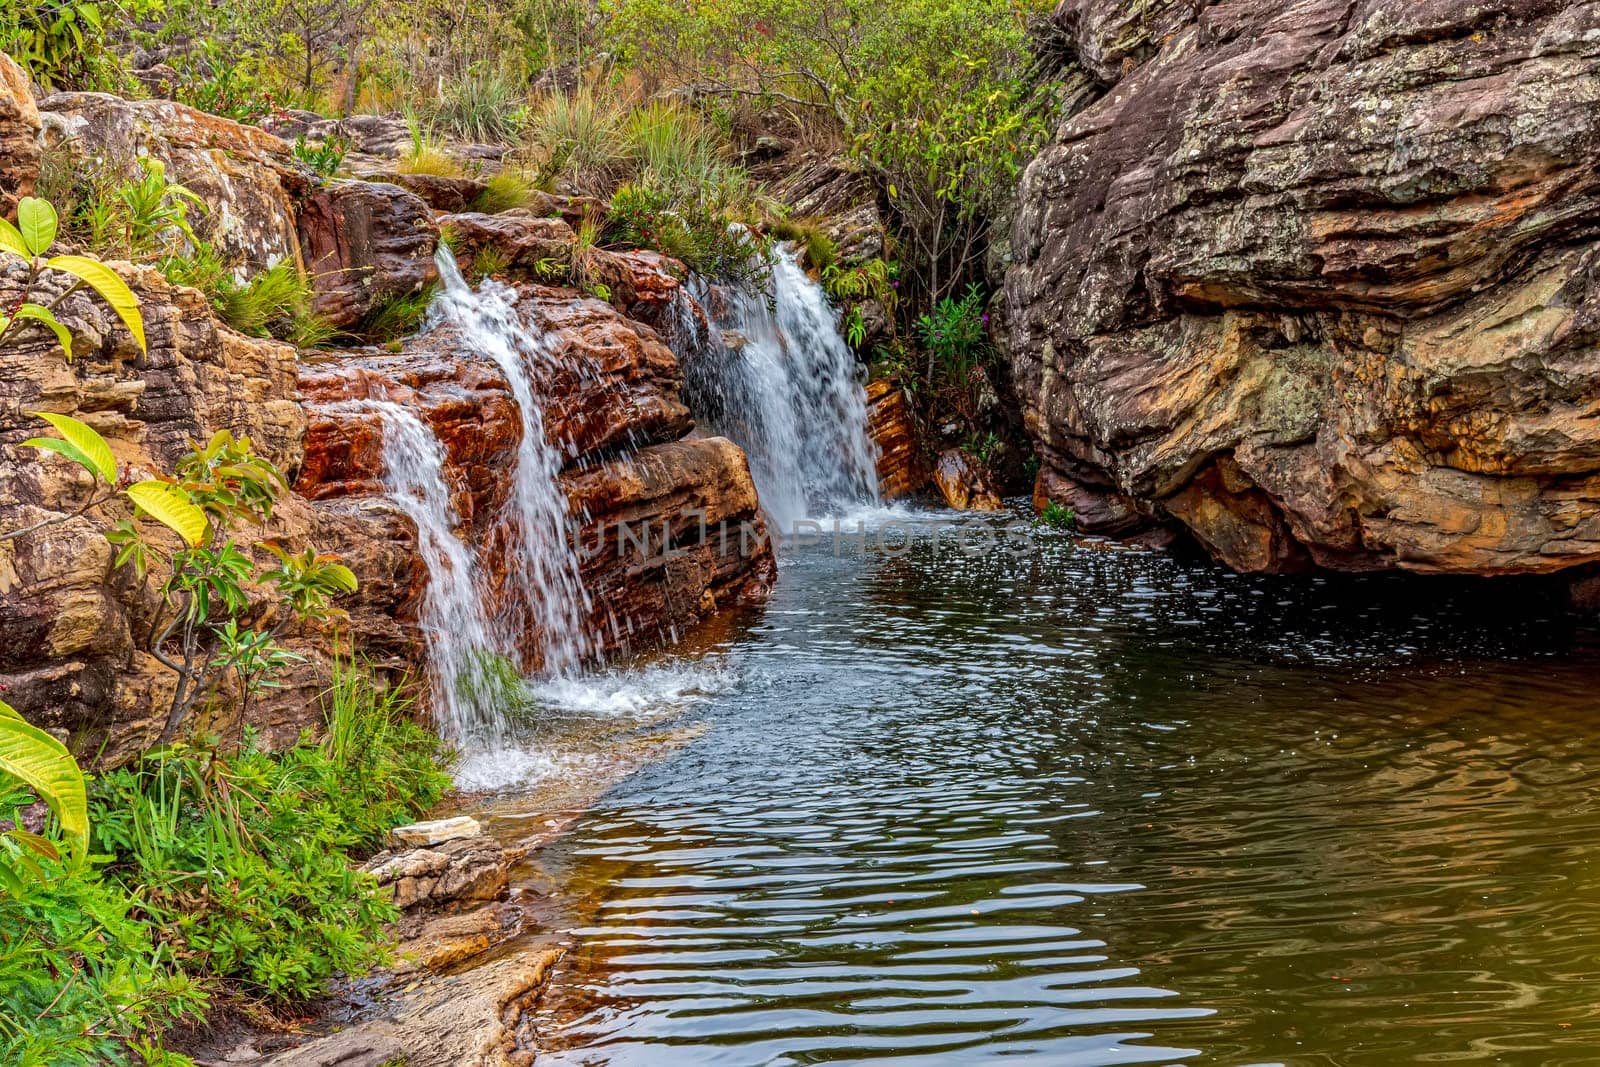 Beautiful and small waterfall among the rocks and vegetation of the Biribiri environmental reserve in Diamantina, Minas Gerais.